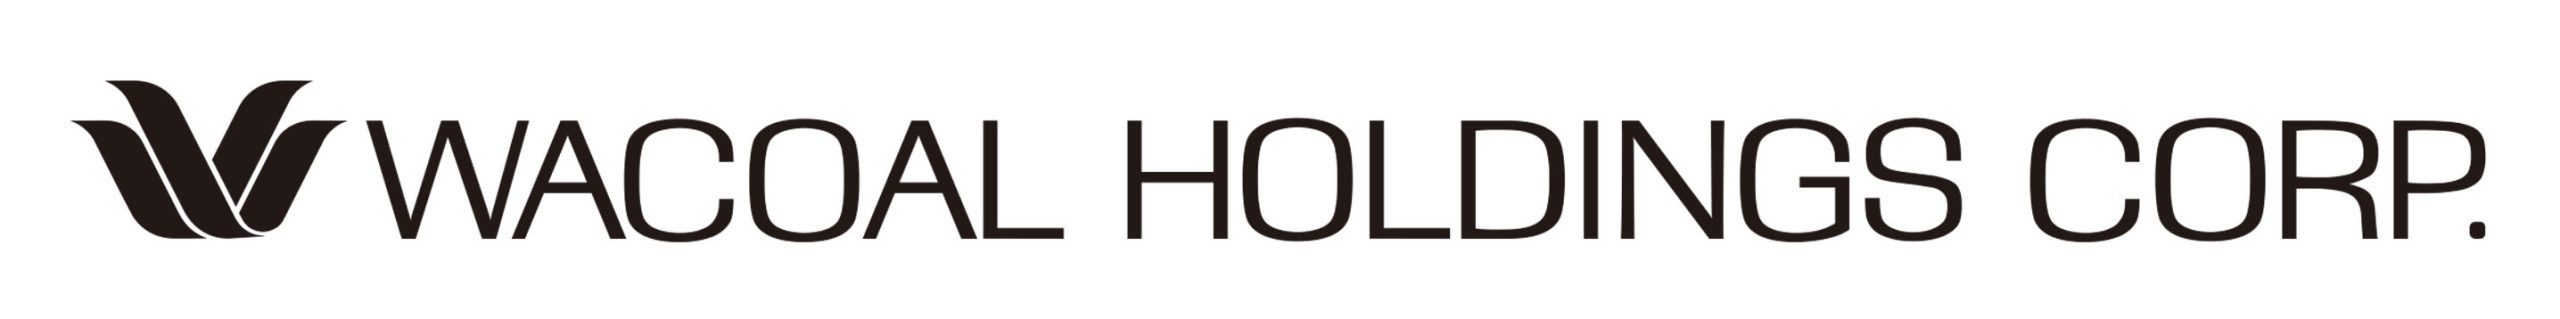 WACOAL HOLDINGS CORP　ロゴ